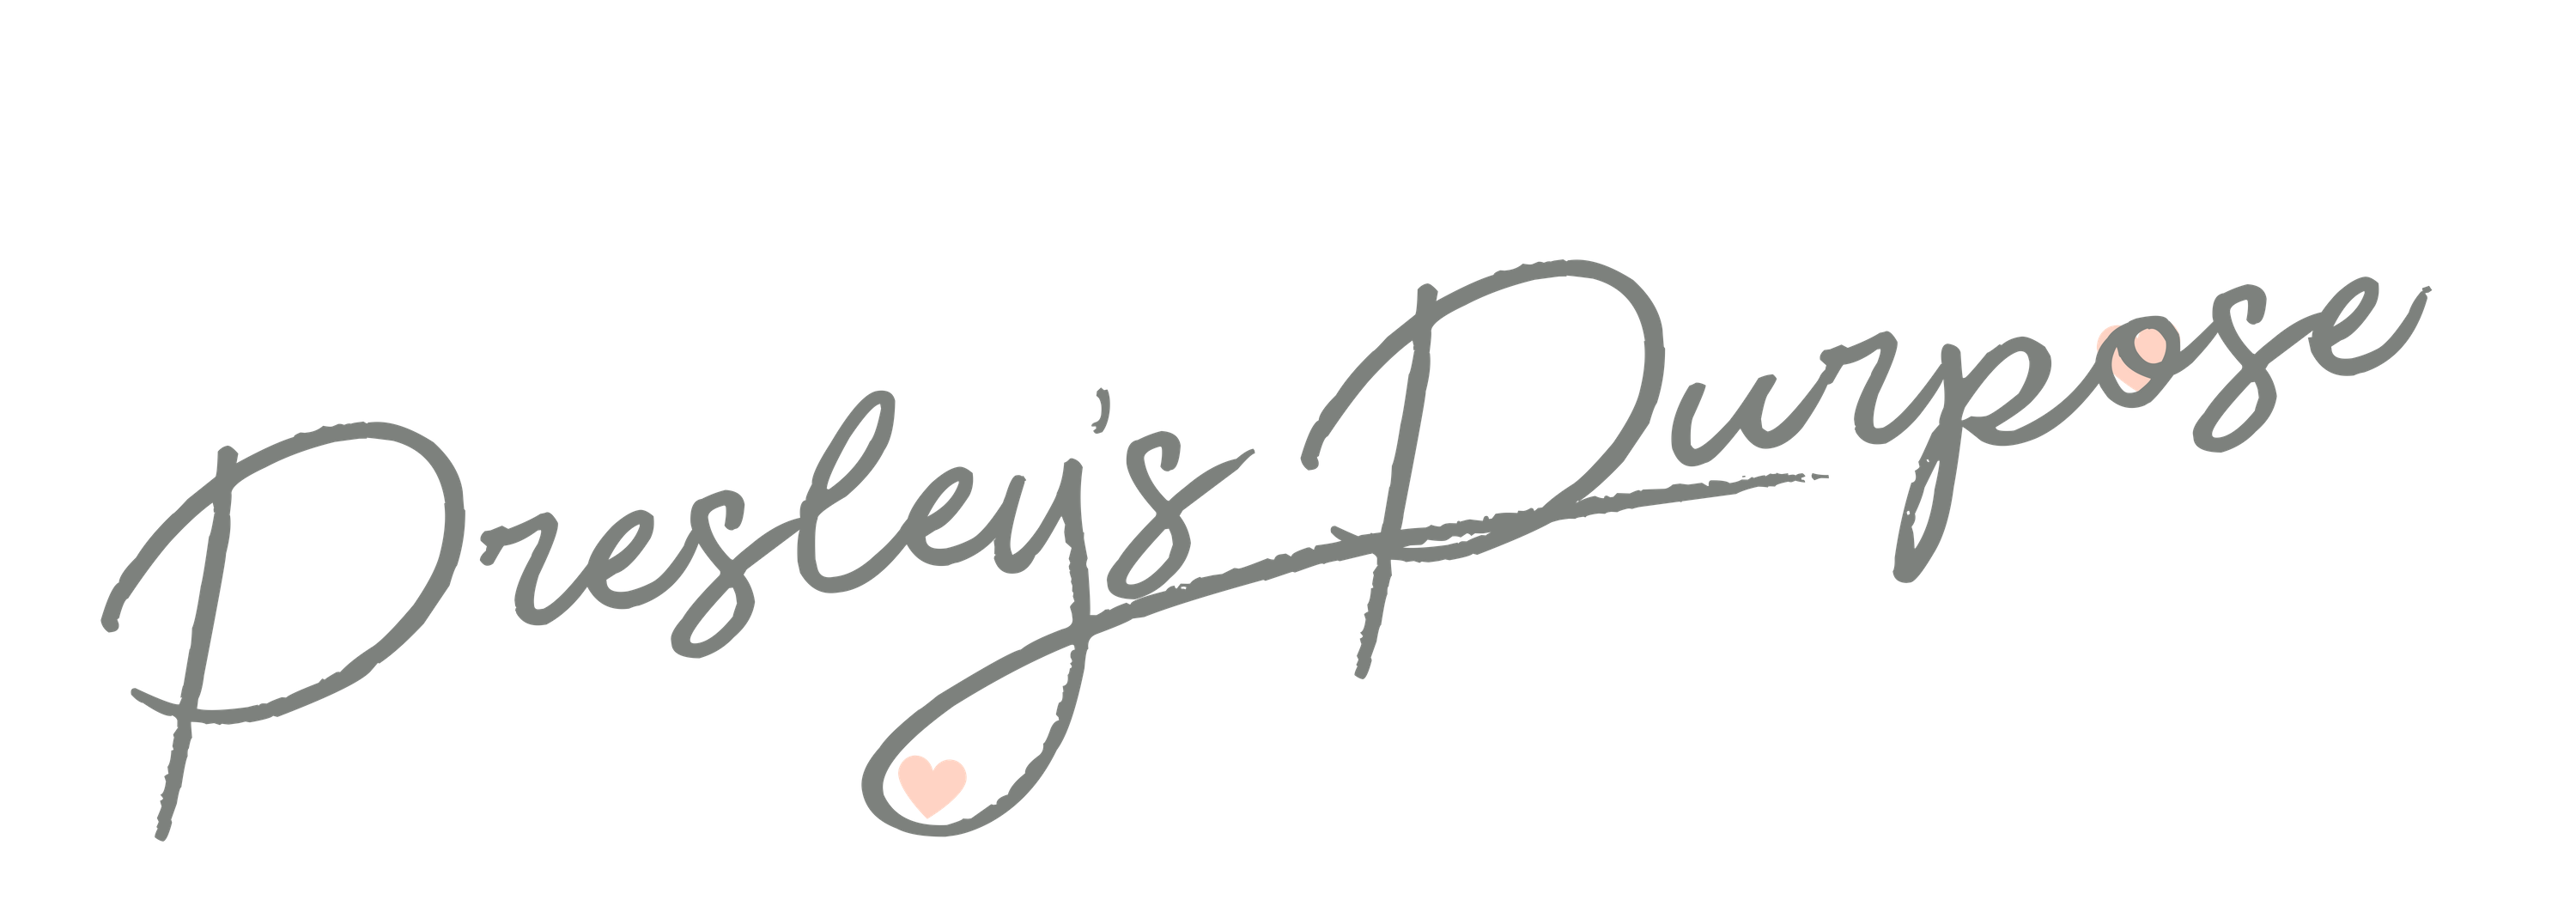 Presley's Purpose logo